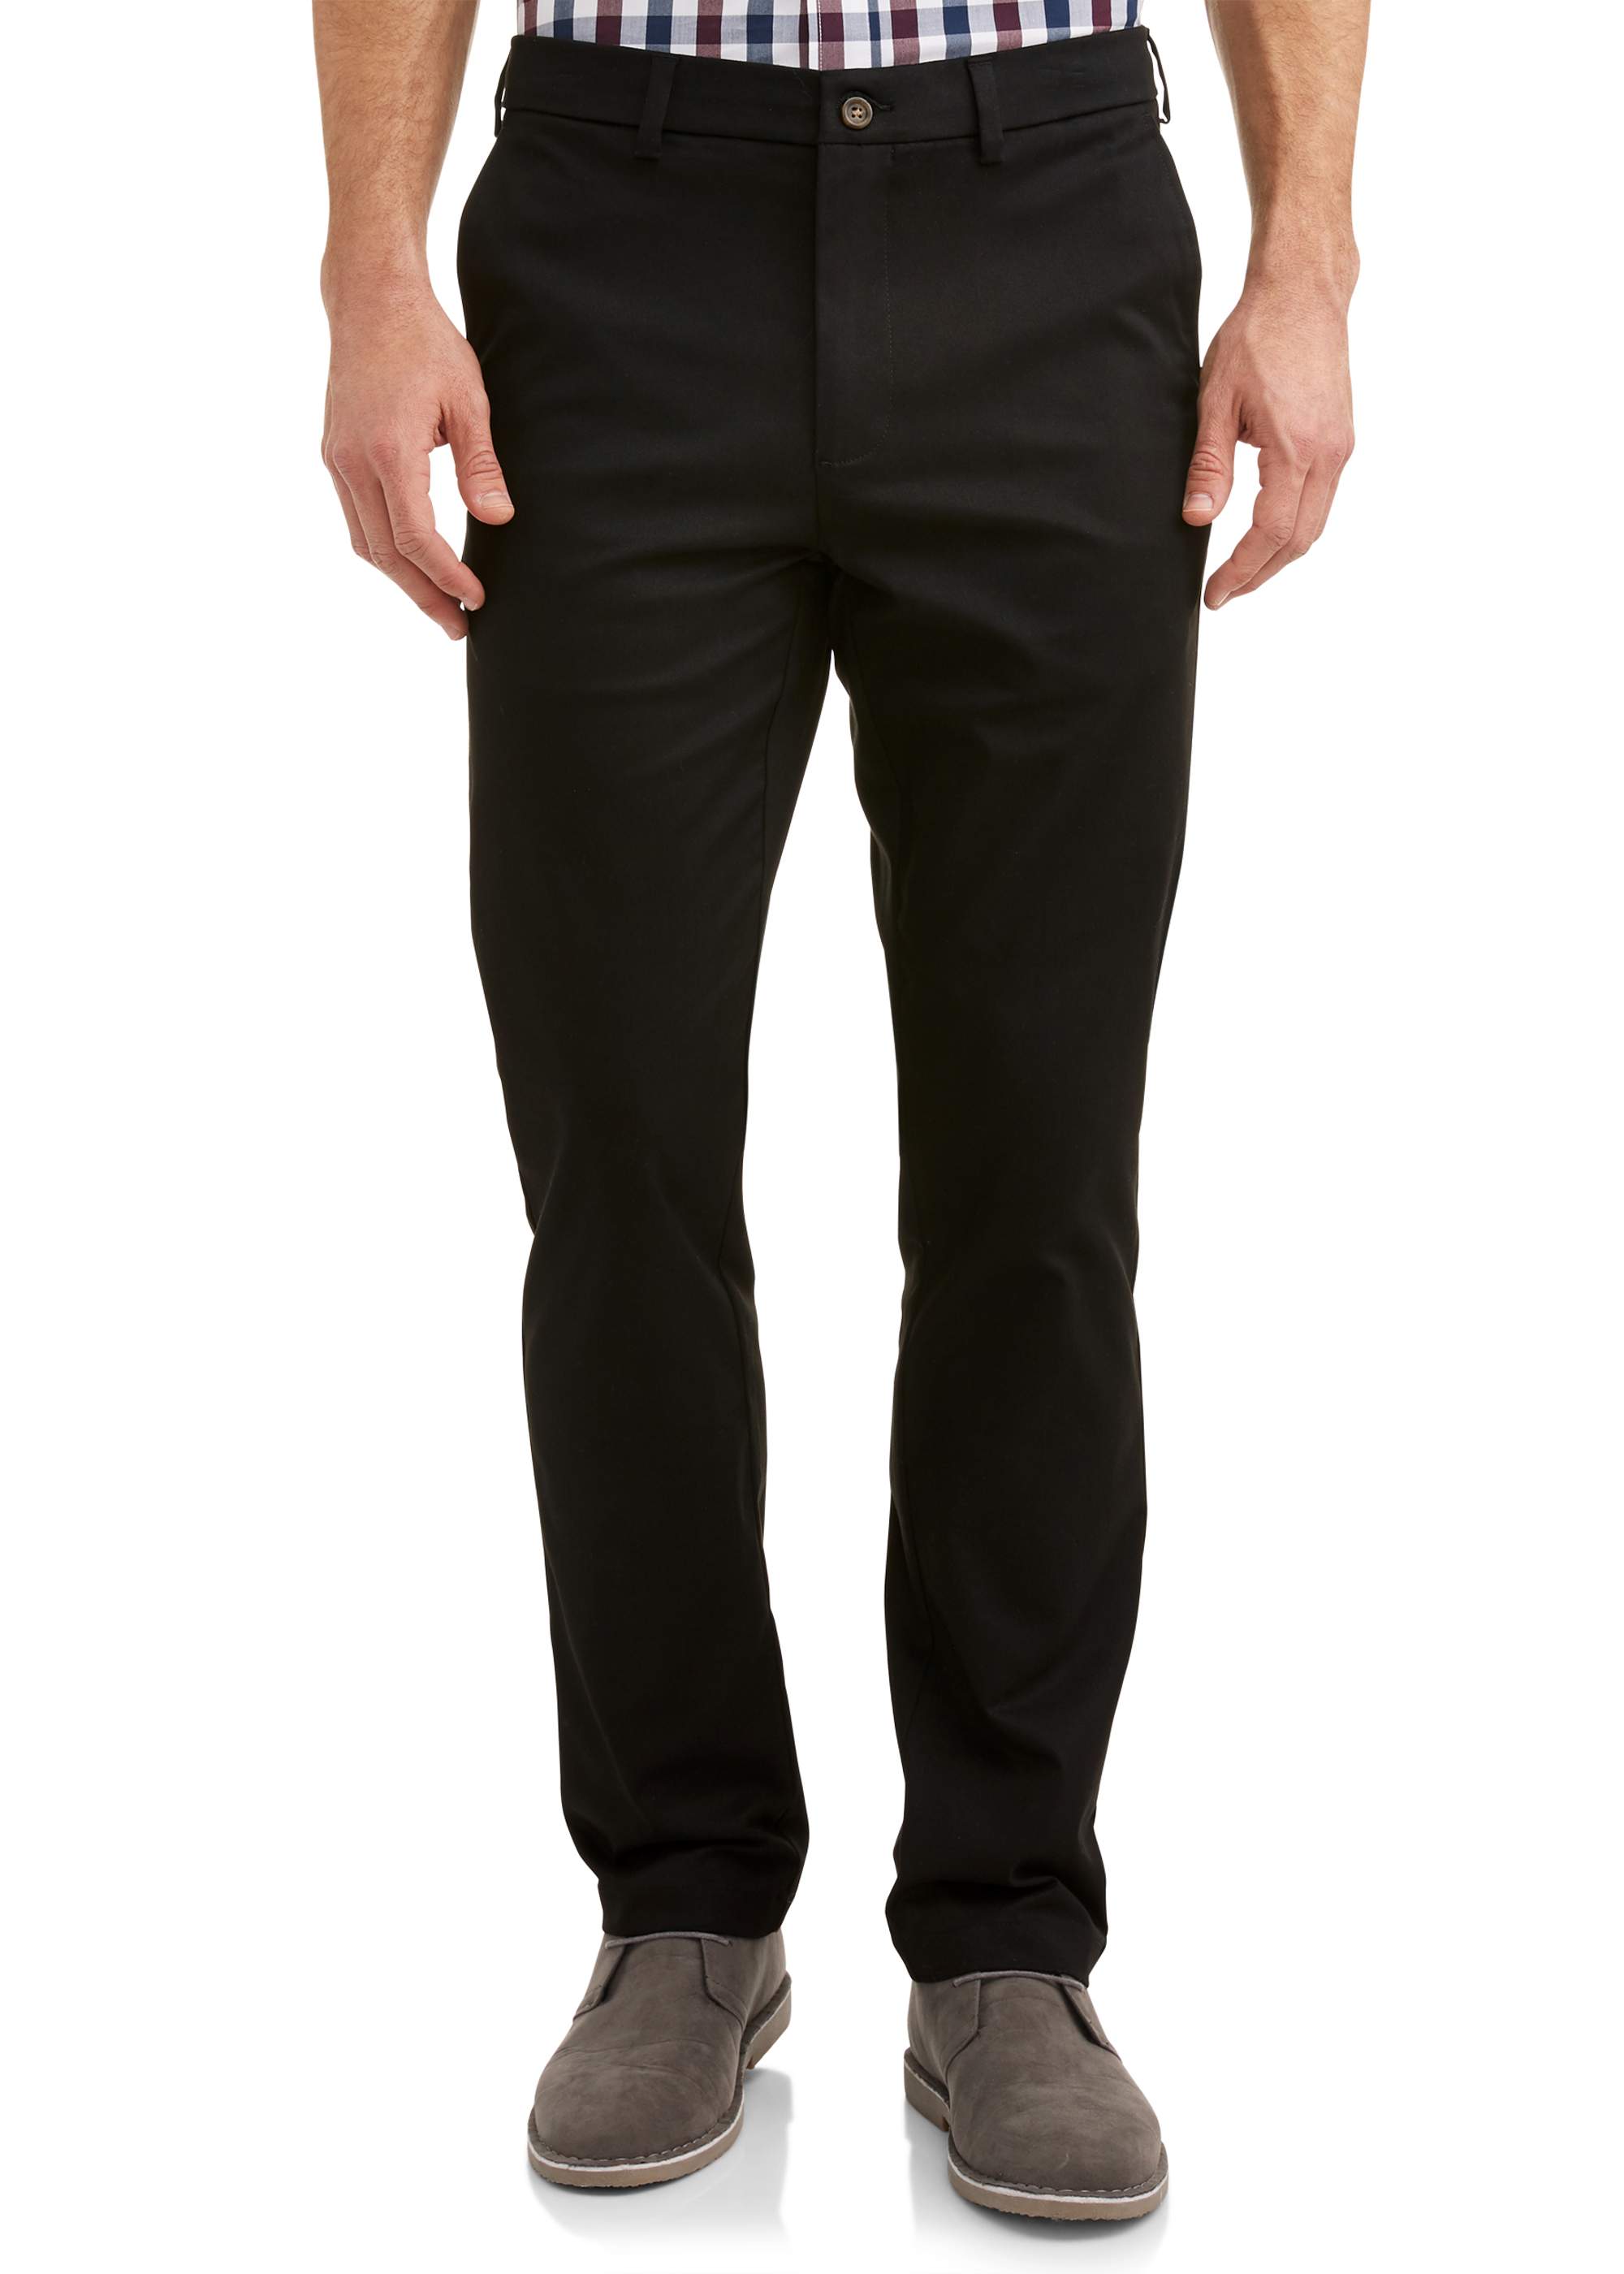 George Men's Premium Straight Fit Khaki Pants - image 1 of 6